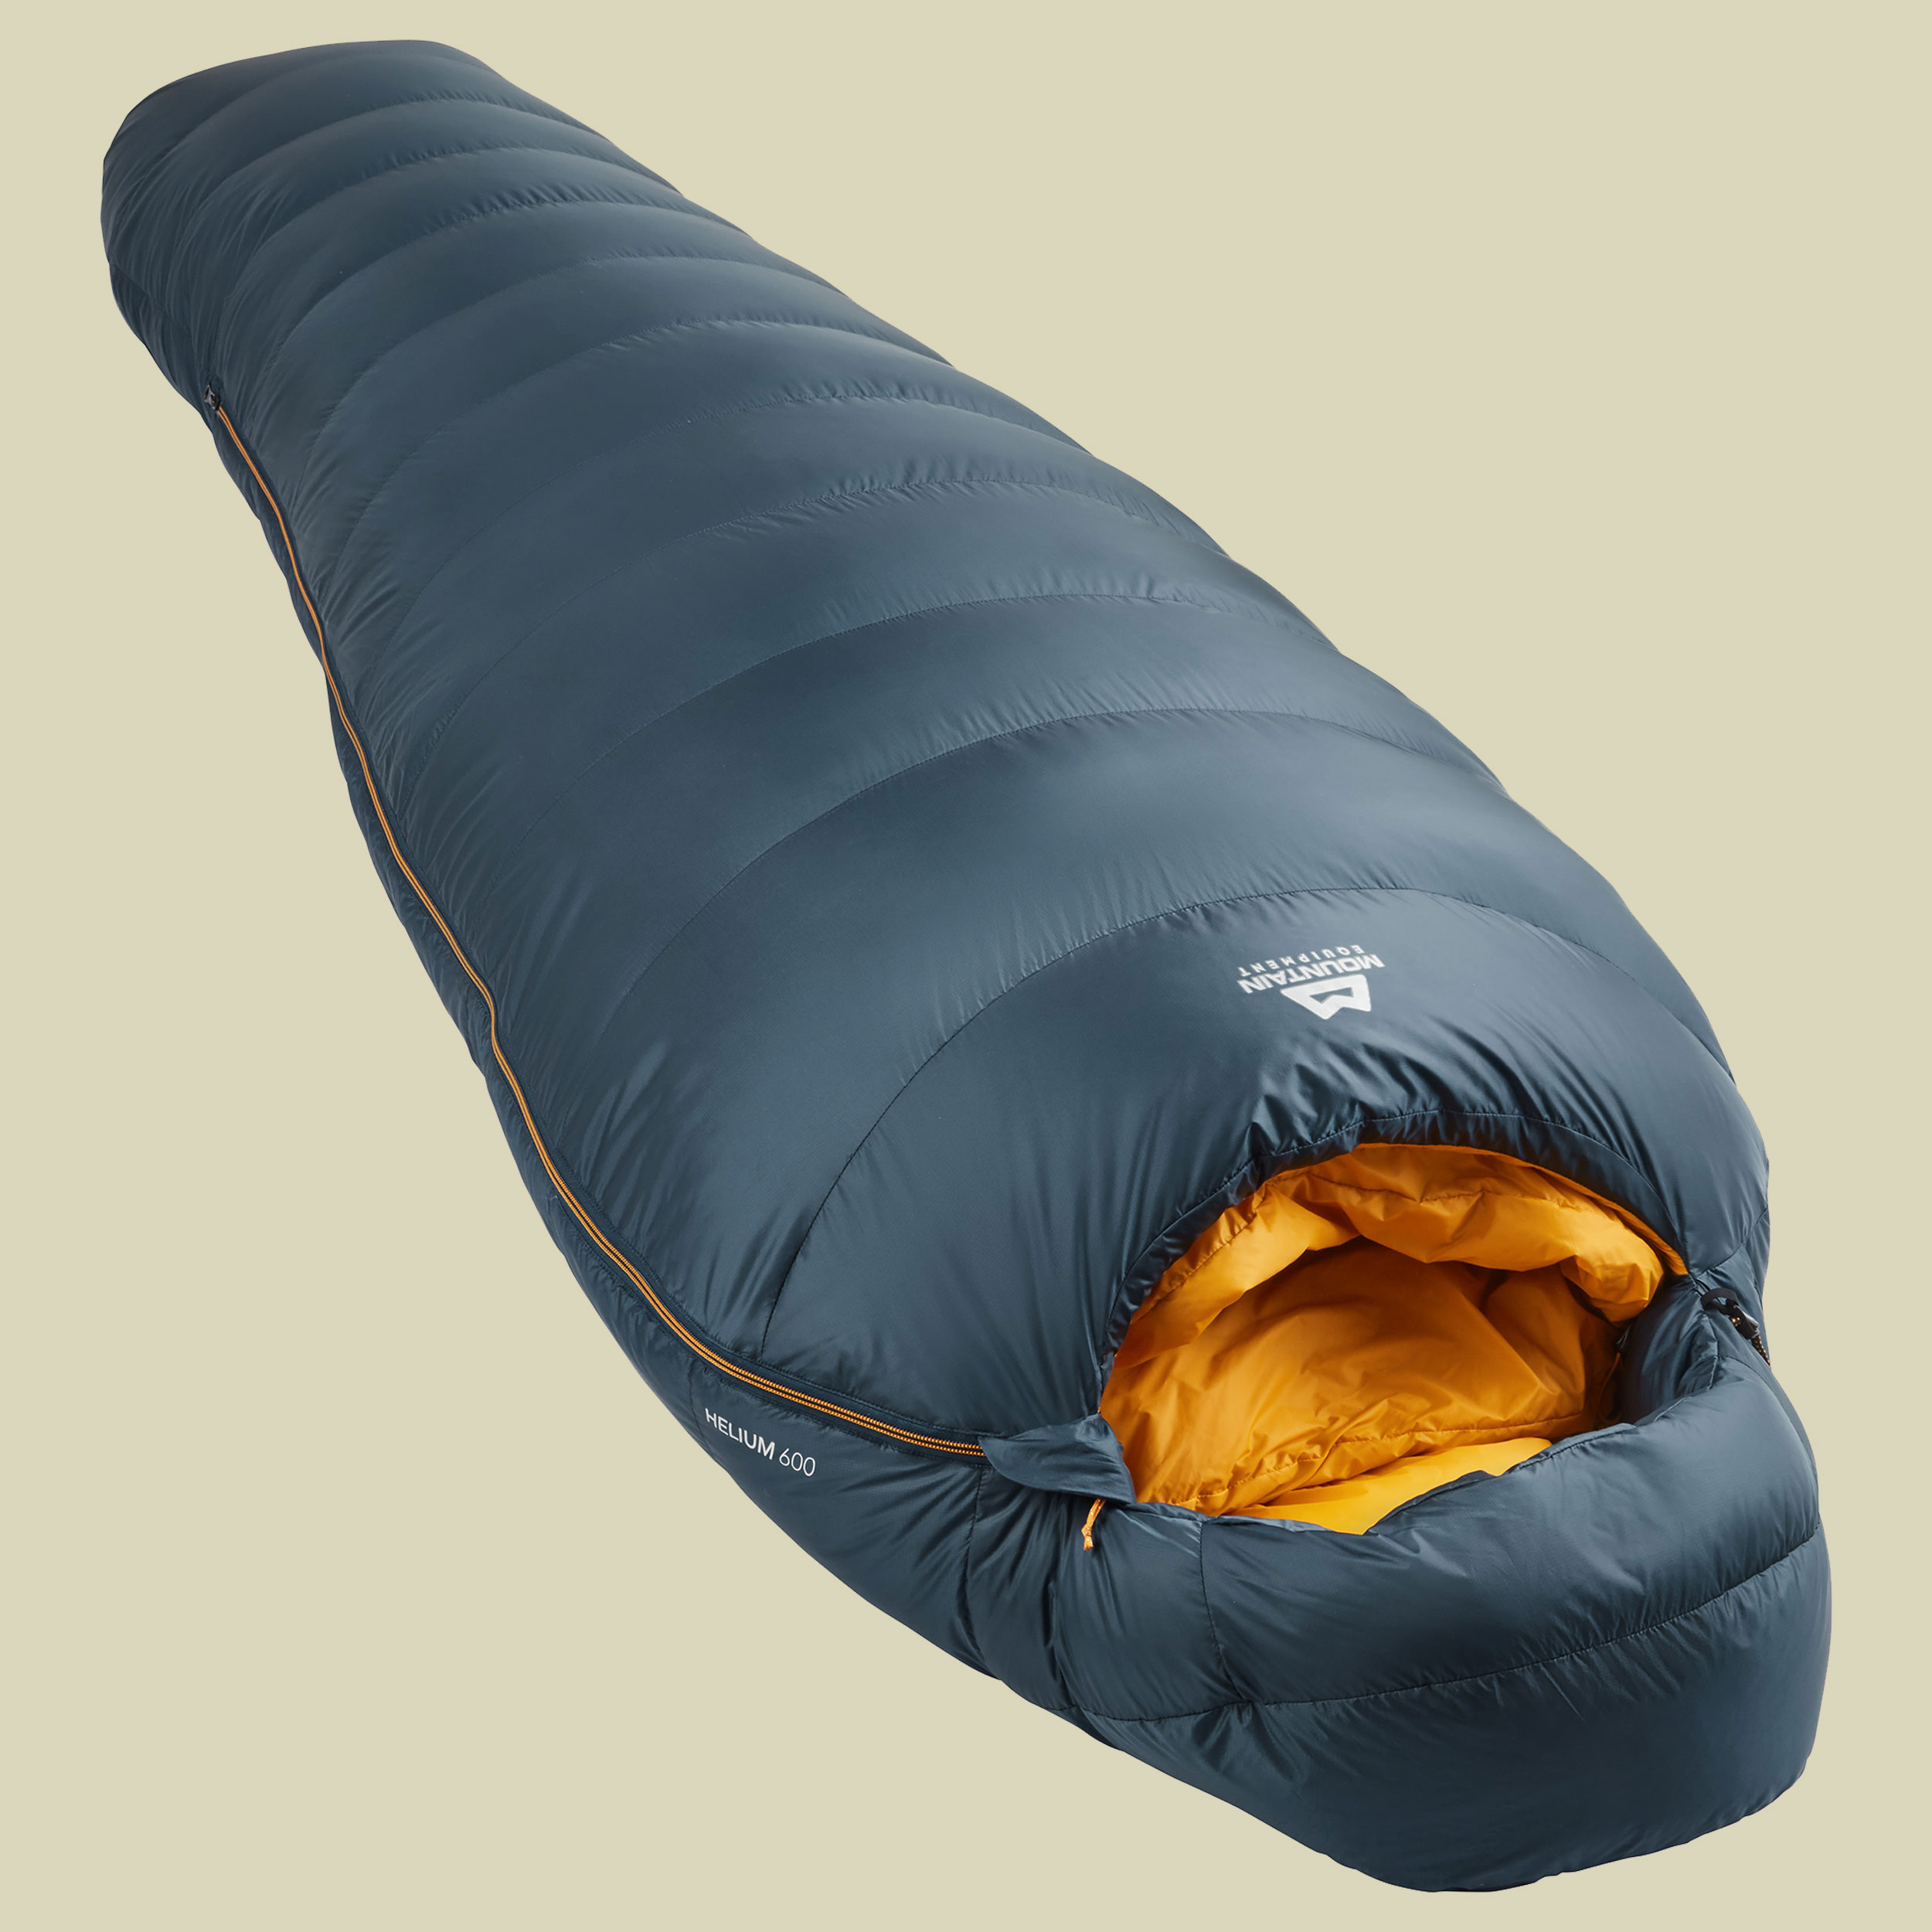 Helium 600 Schlafsack Körpergröße 185 cm cm Farbe majolica blue, Schlafsack Reissverschluss links